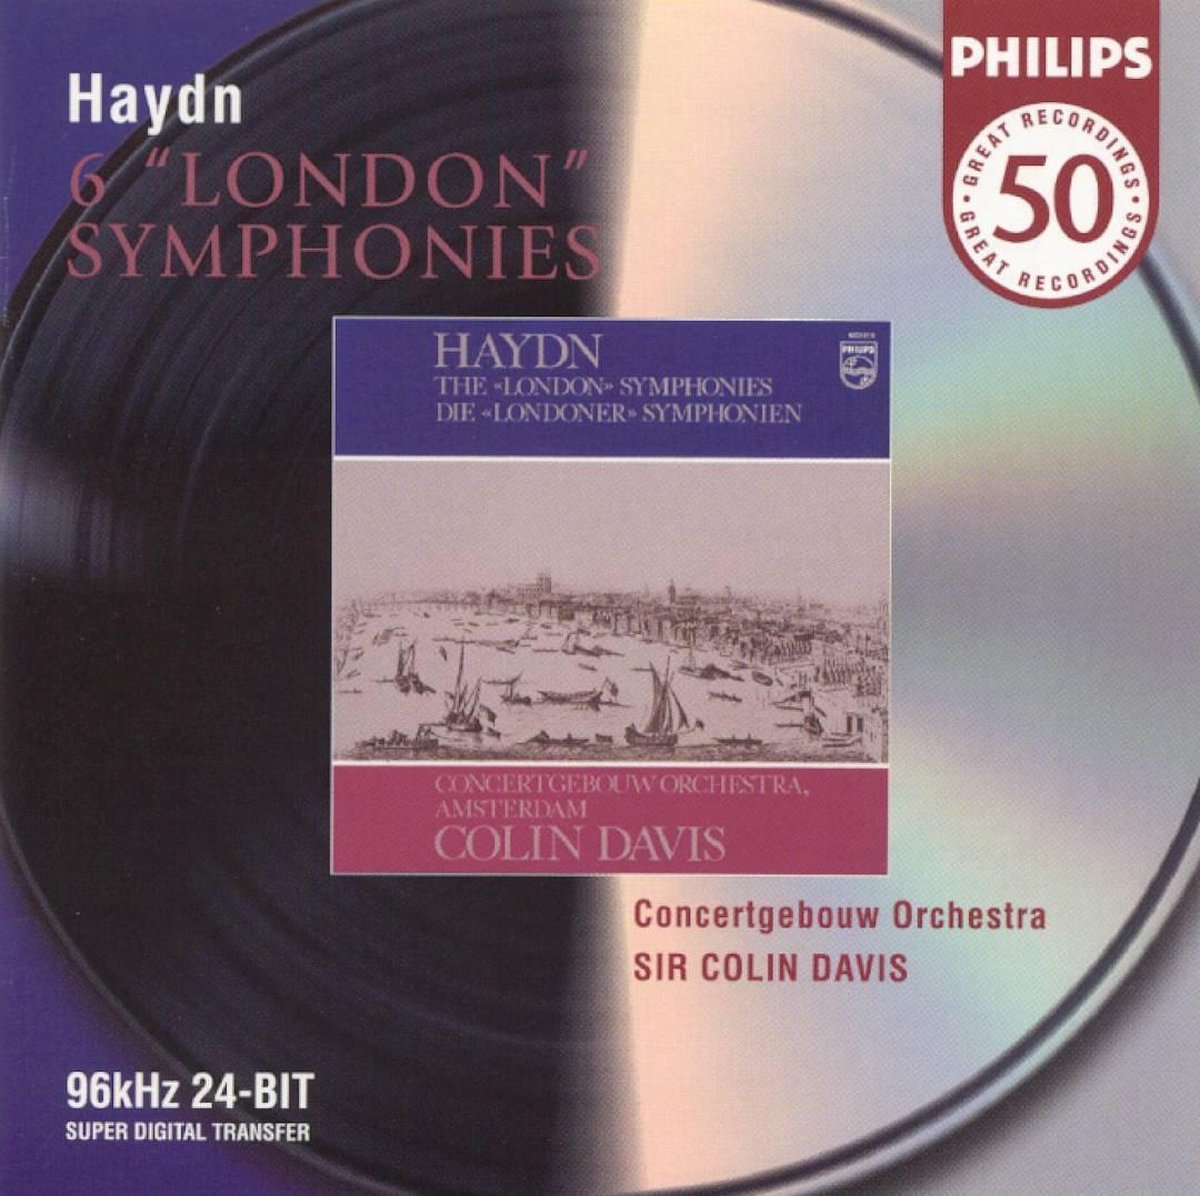 Philips 50 - Haydn: 6 London Symphonies / Sir Colin Davis, Concertgebouw - Colin Davis